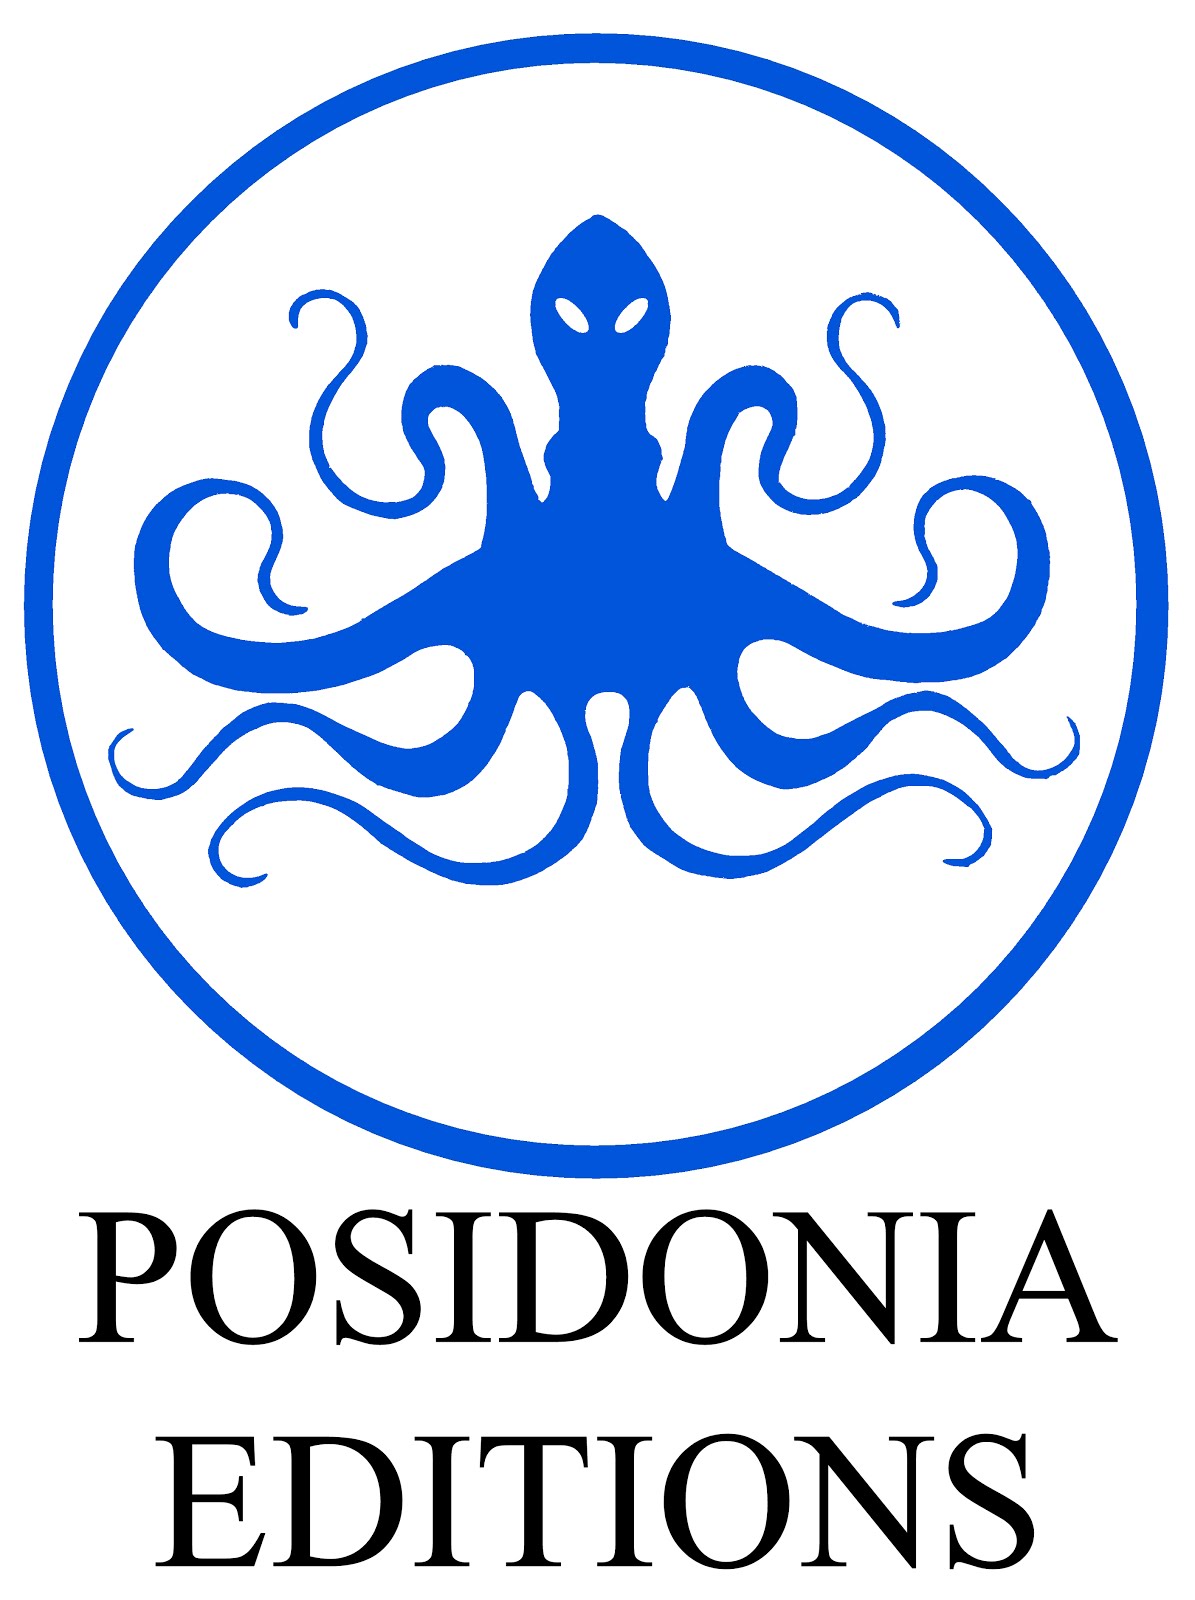 Chez Posidonia Editions